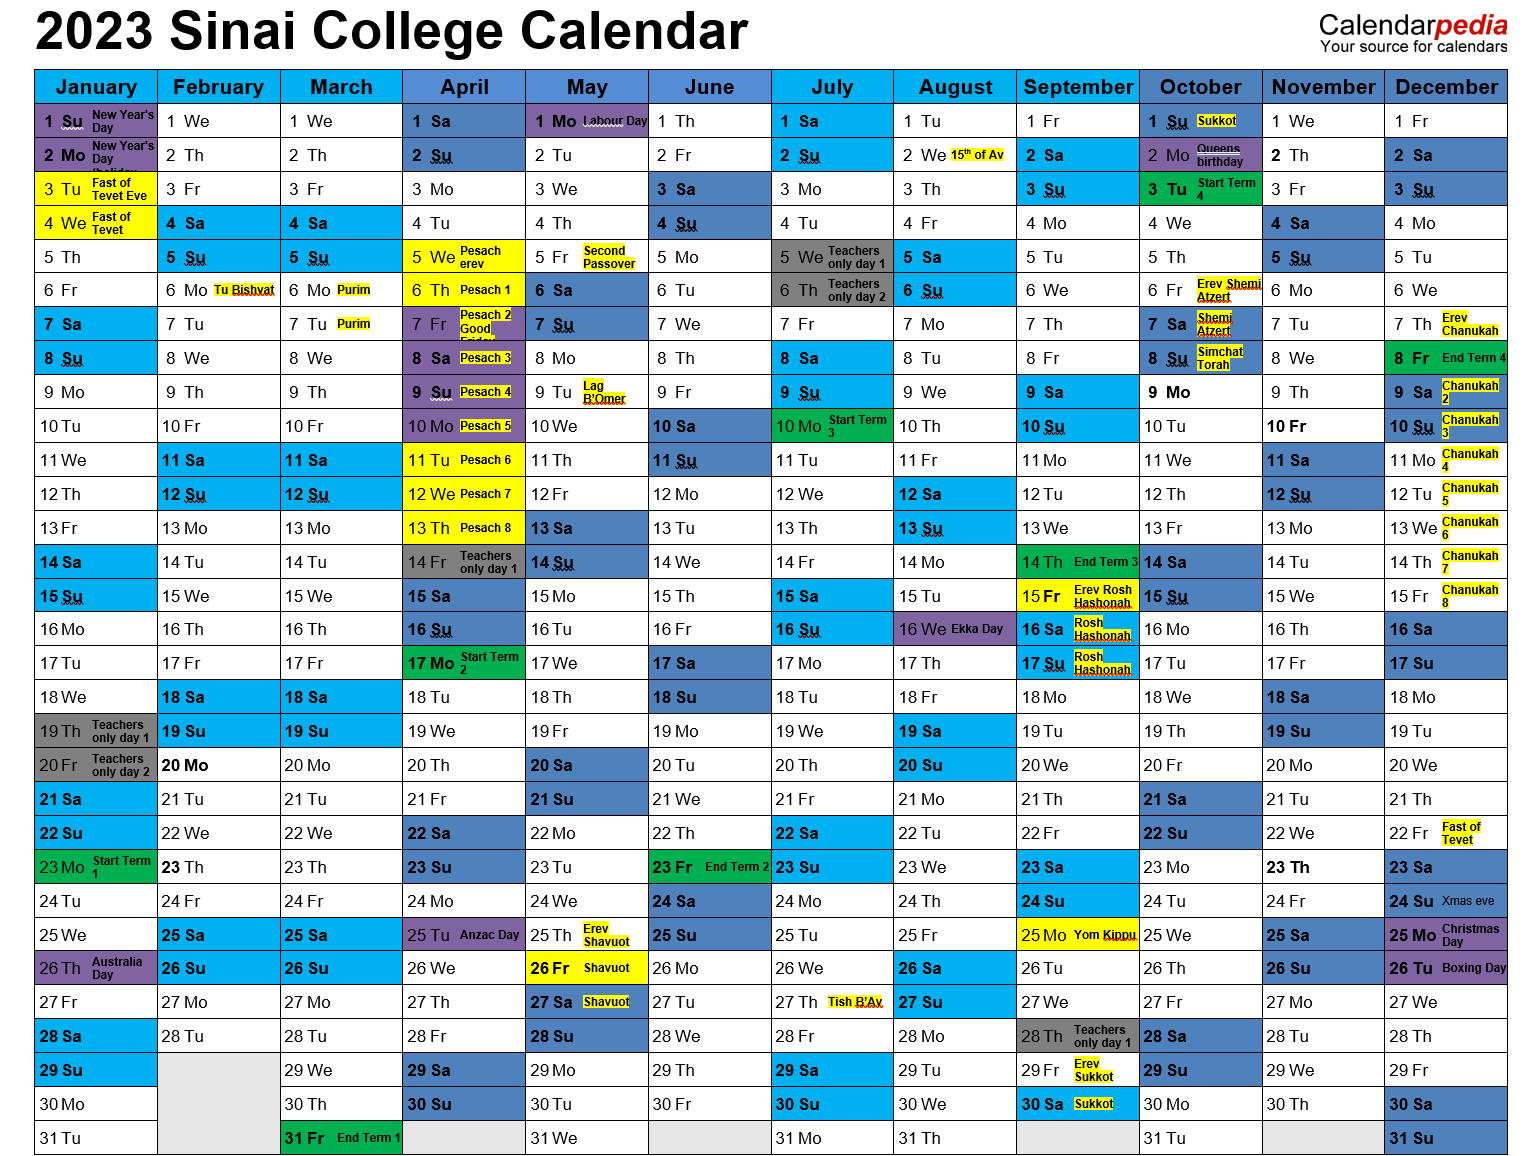 Sinai School Calendar and Events Sinai College